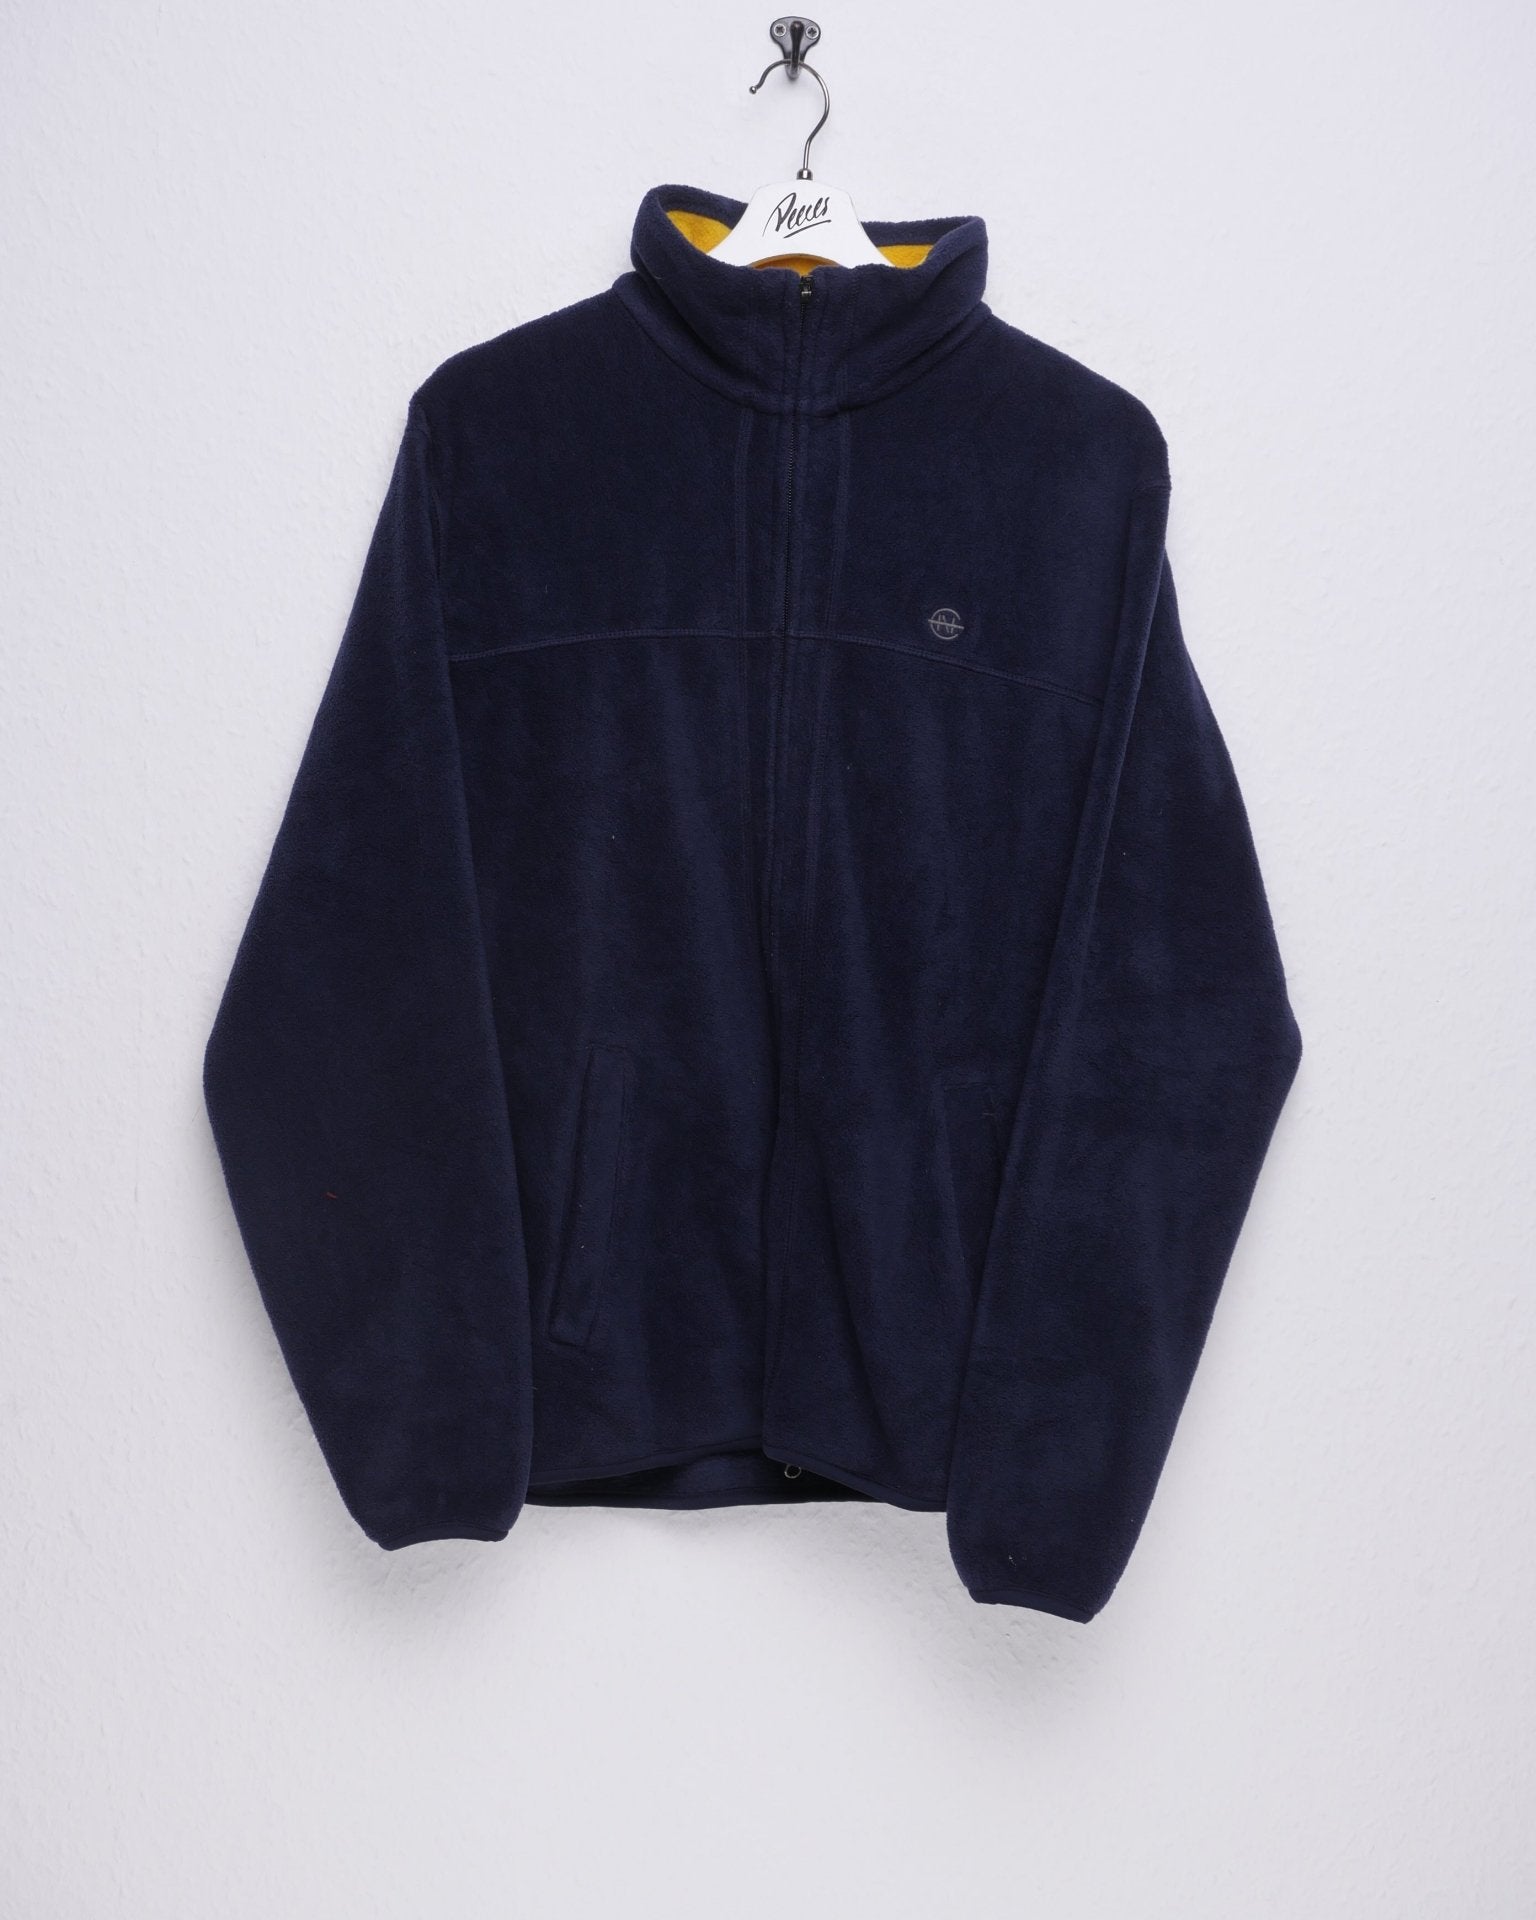 Nautica embroidered Logo blue Fleece Zip Sweater - Peeces